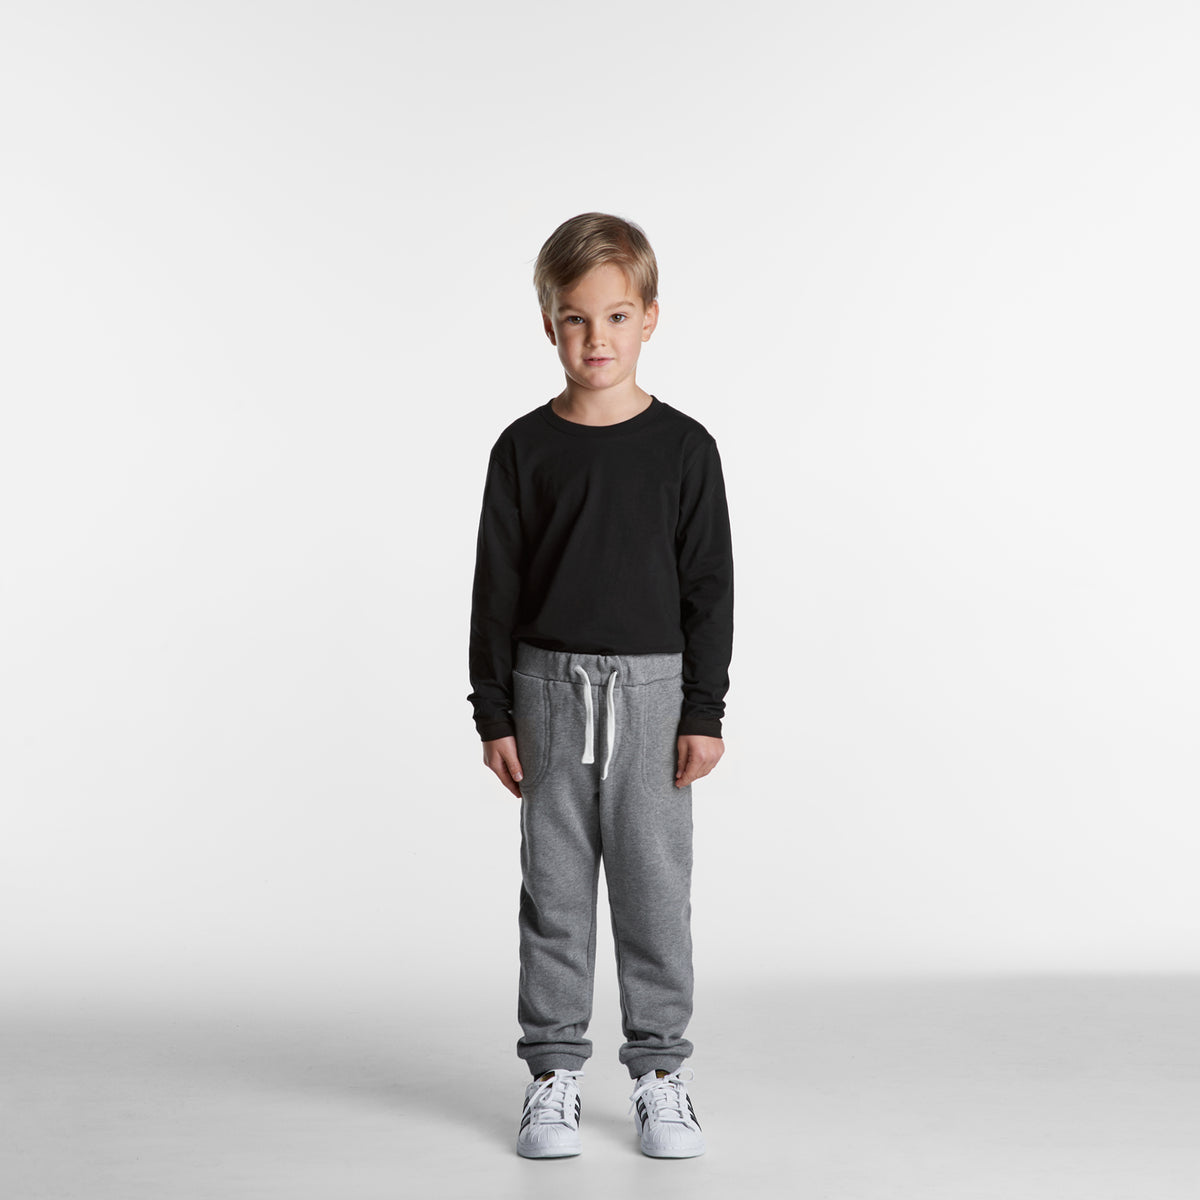 Kids Track Pants - Pants/Shorts - The Fabric Printer